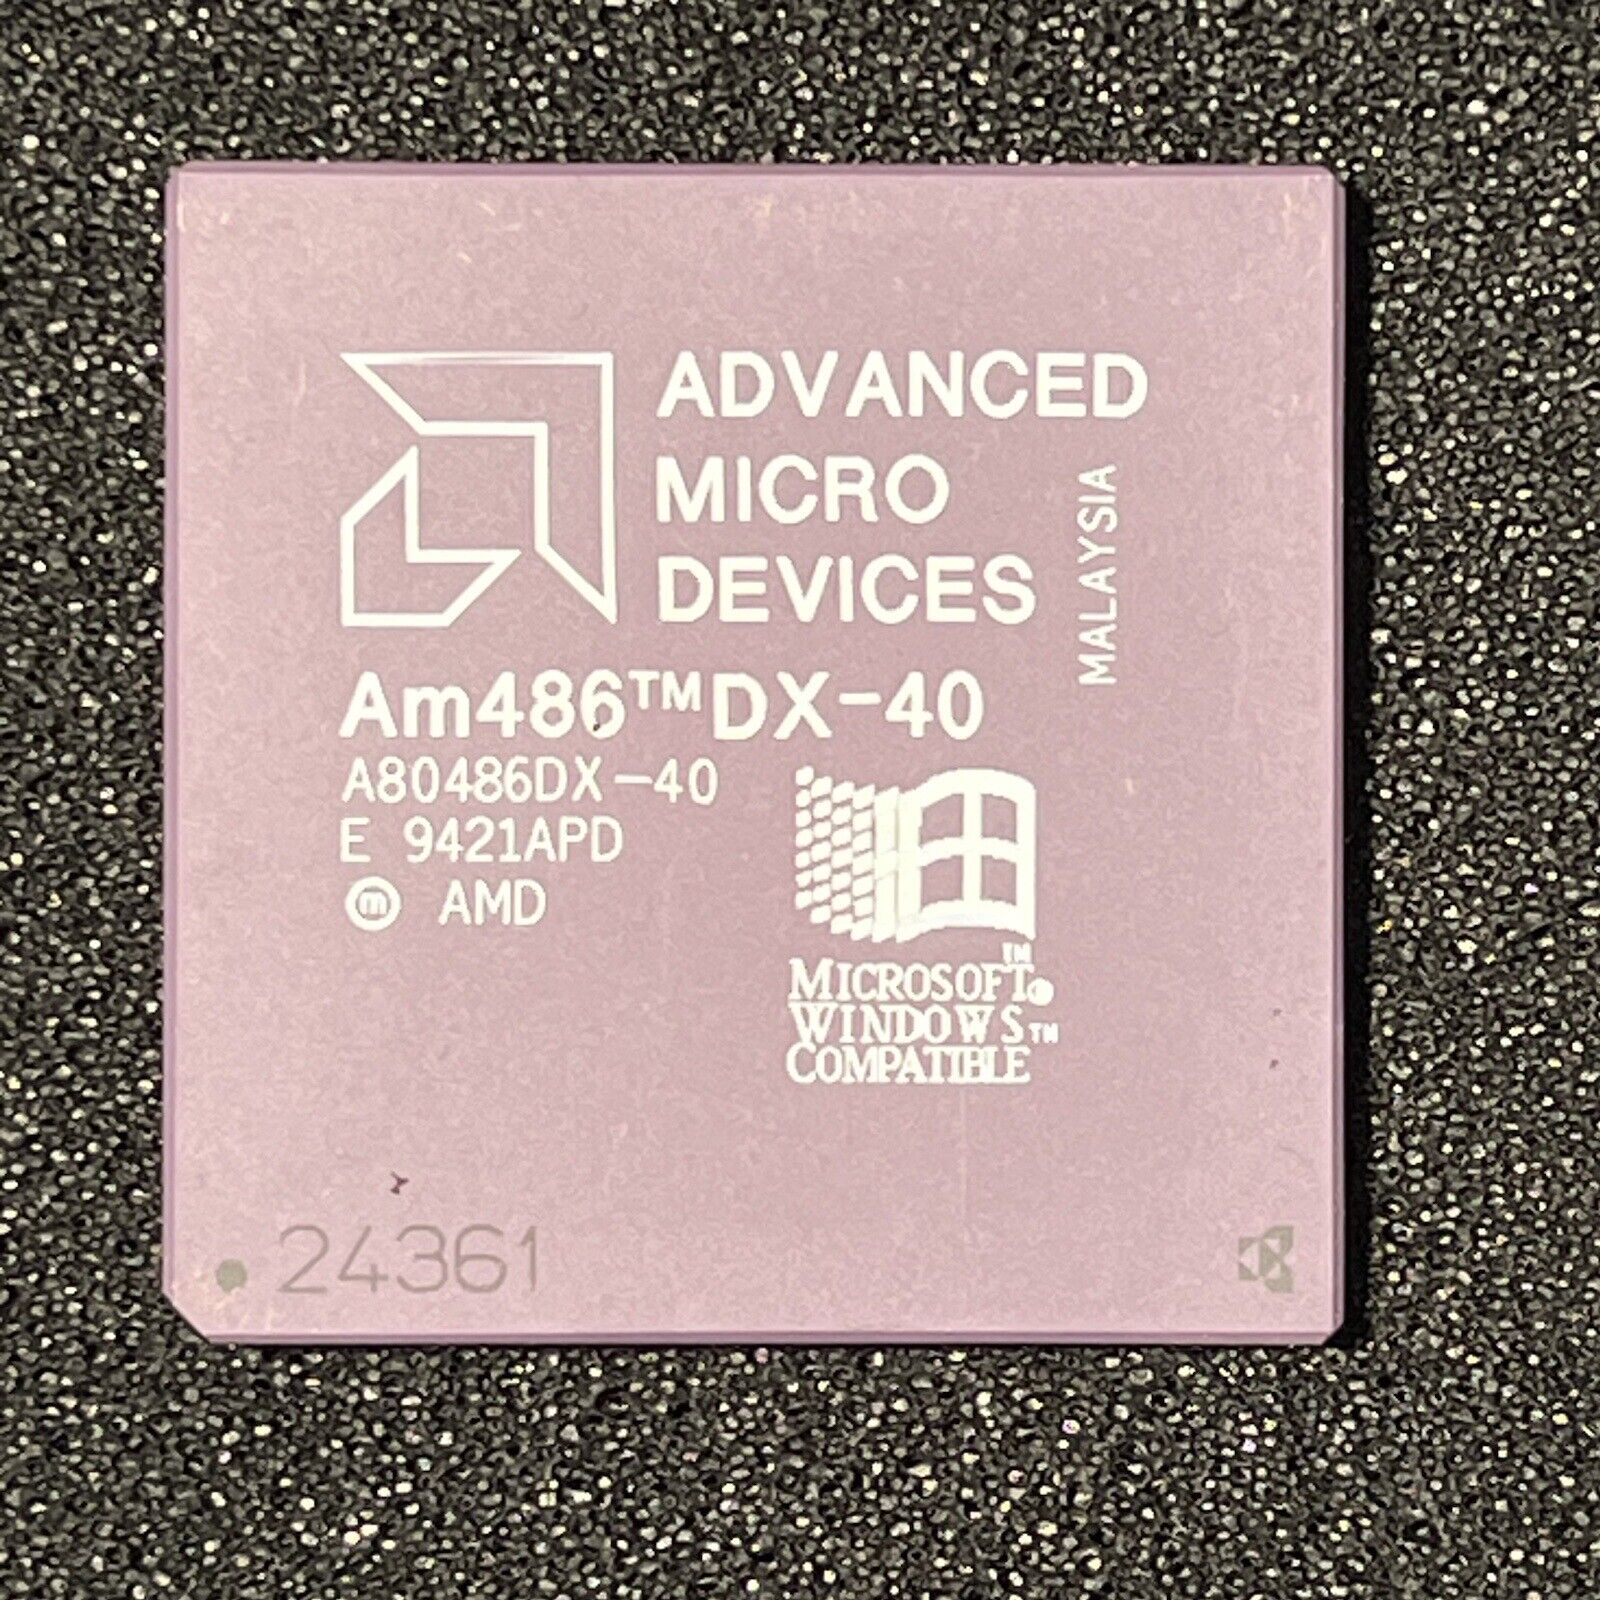 Mint AMD Am486 DX-40 A80486DX-40, 486DX